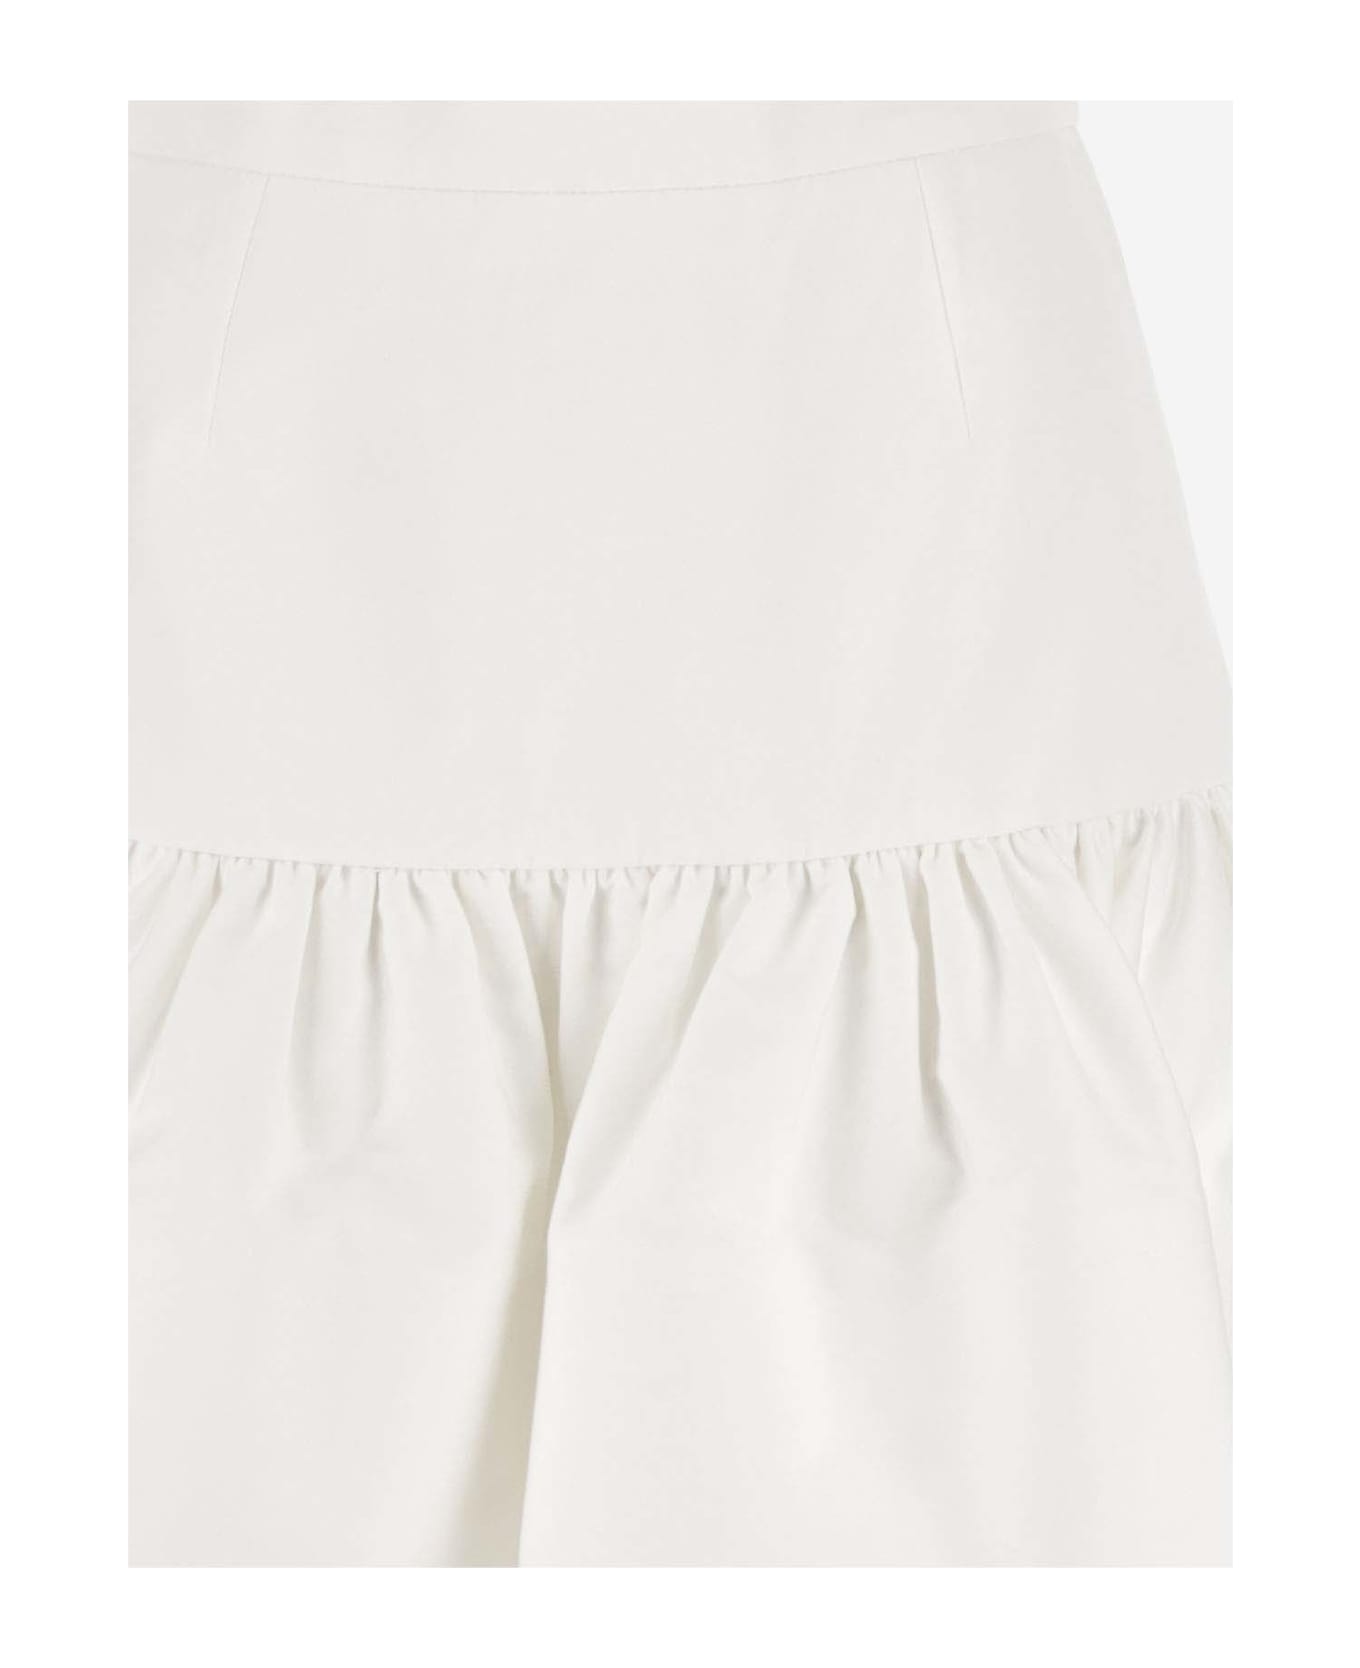 Patou Cotton Skirt - White スカート